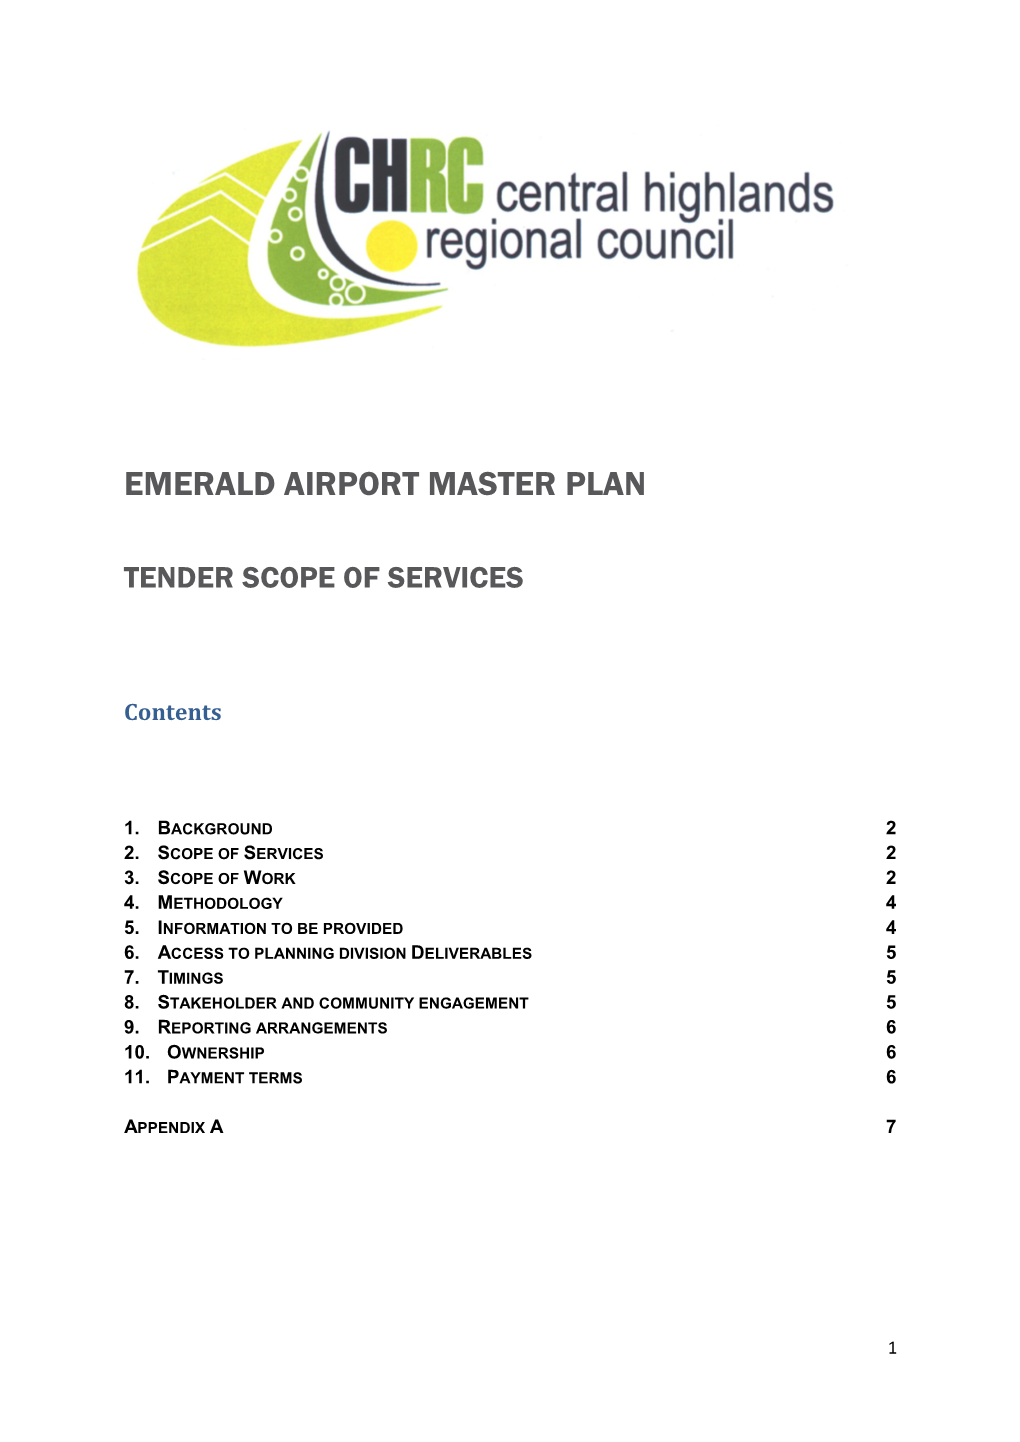 Emerald Airport Master Plan